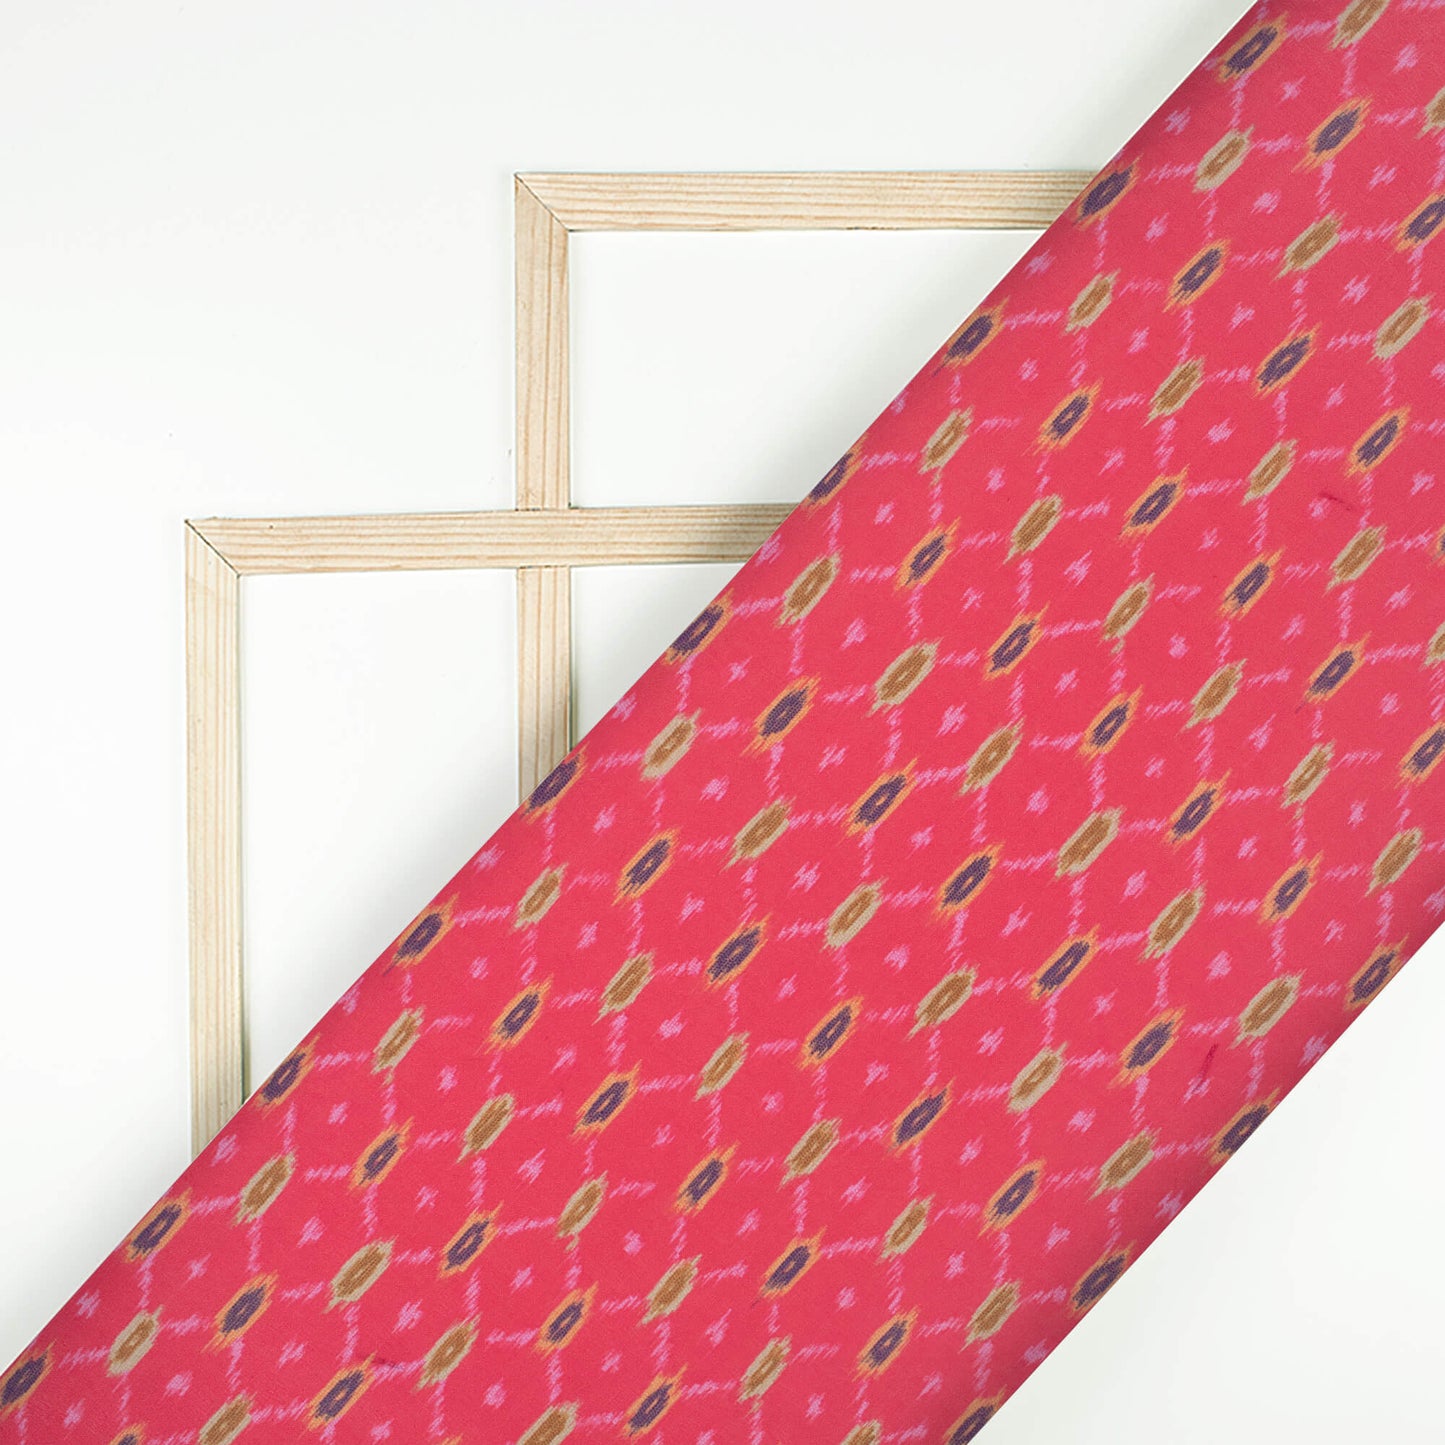 Deep Pink And Army Green Ikat Pattern Digital Print Georgette Fabric